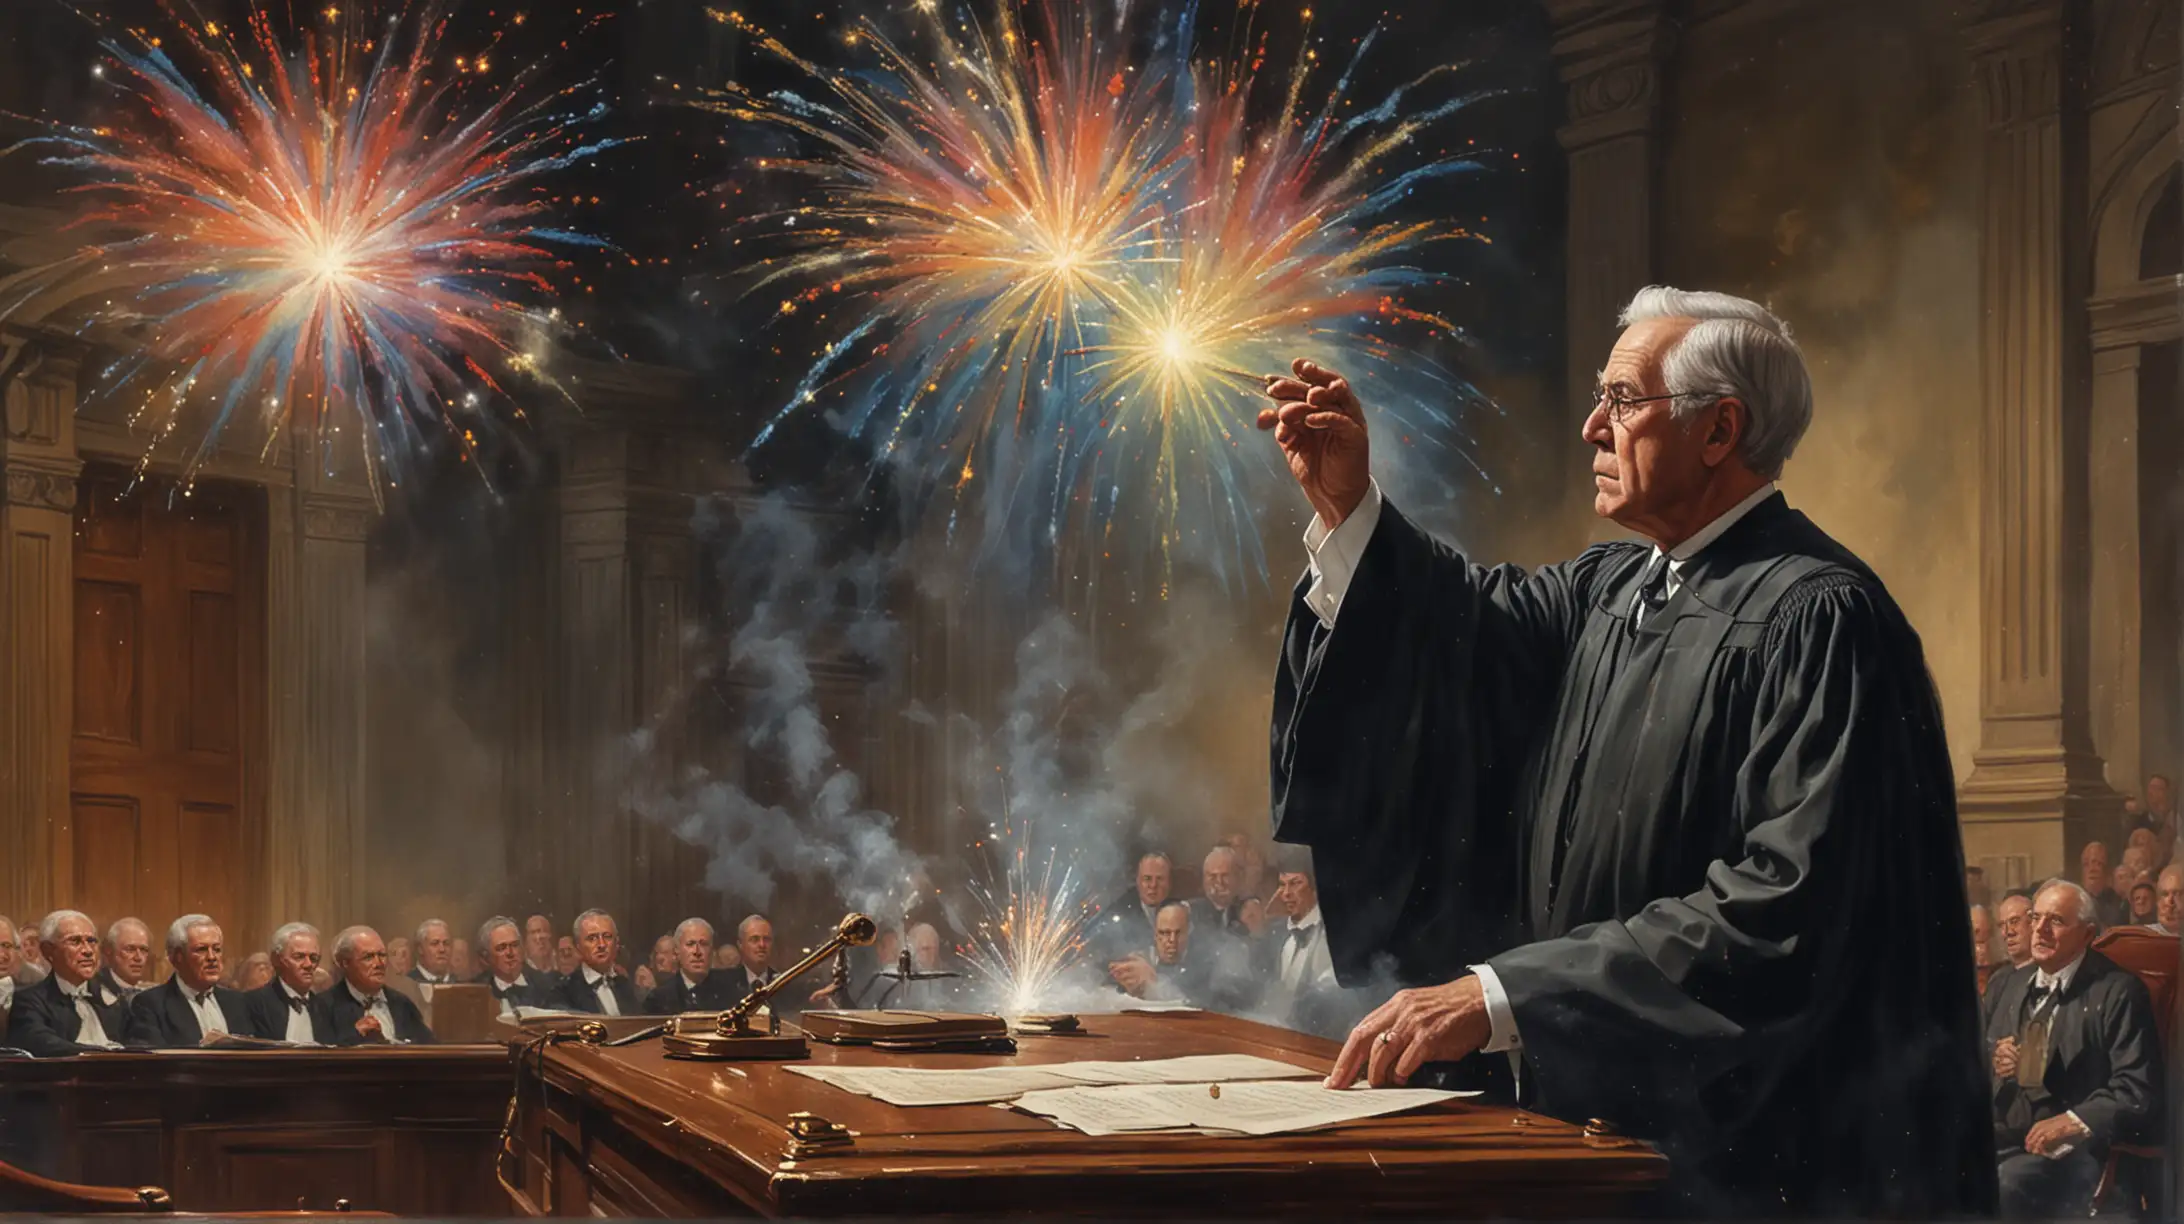 Historical Courtroom Judge Admiring Fireworks